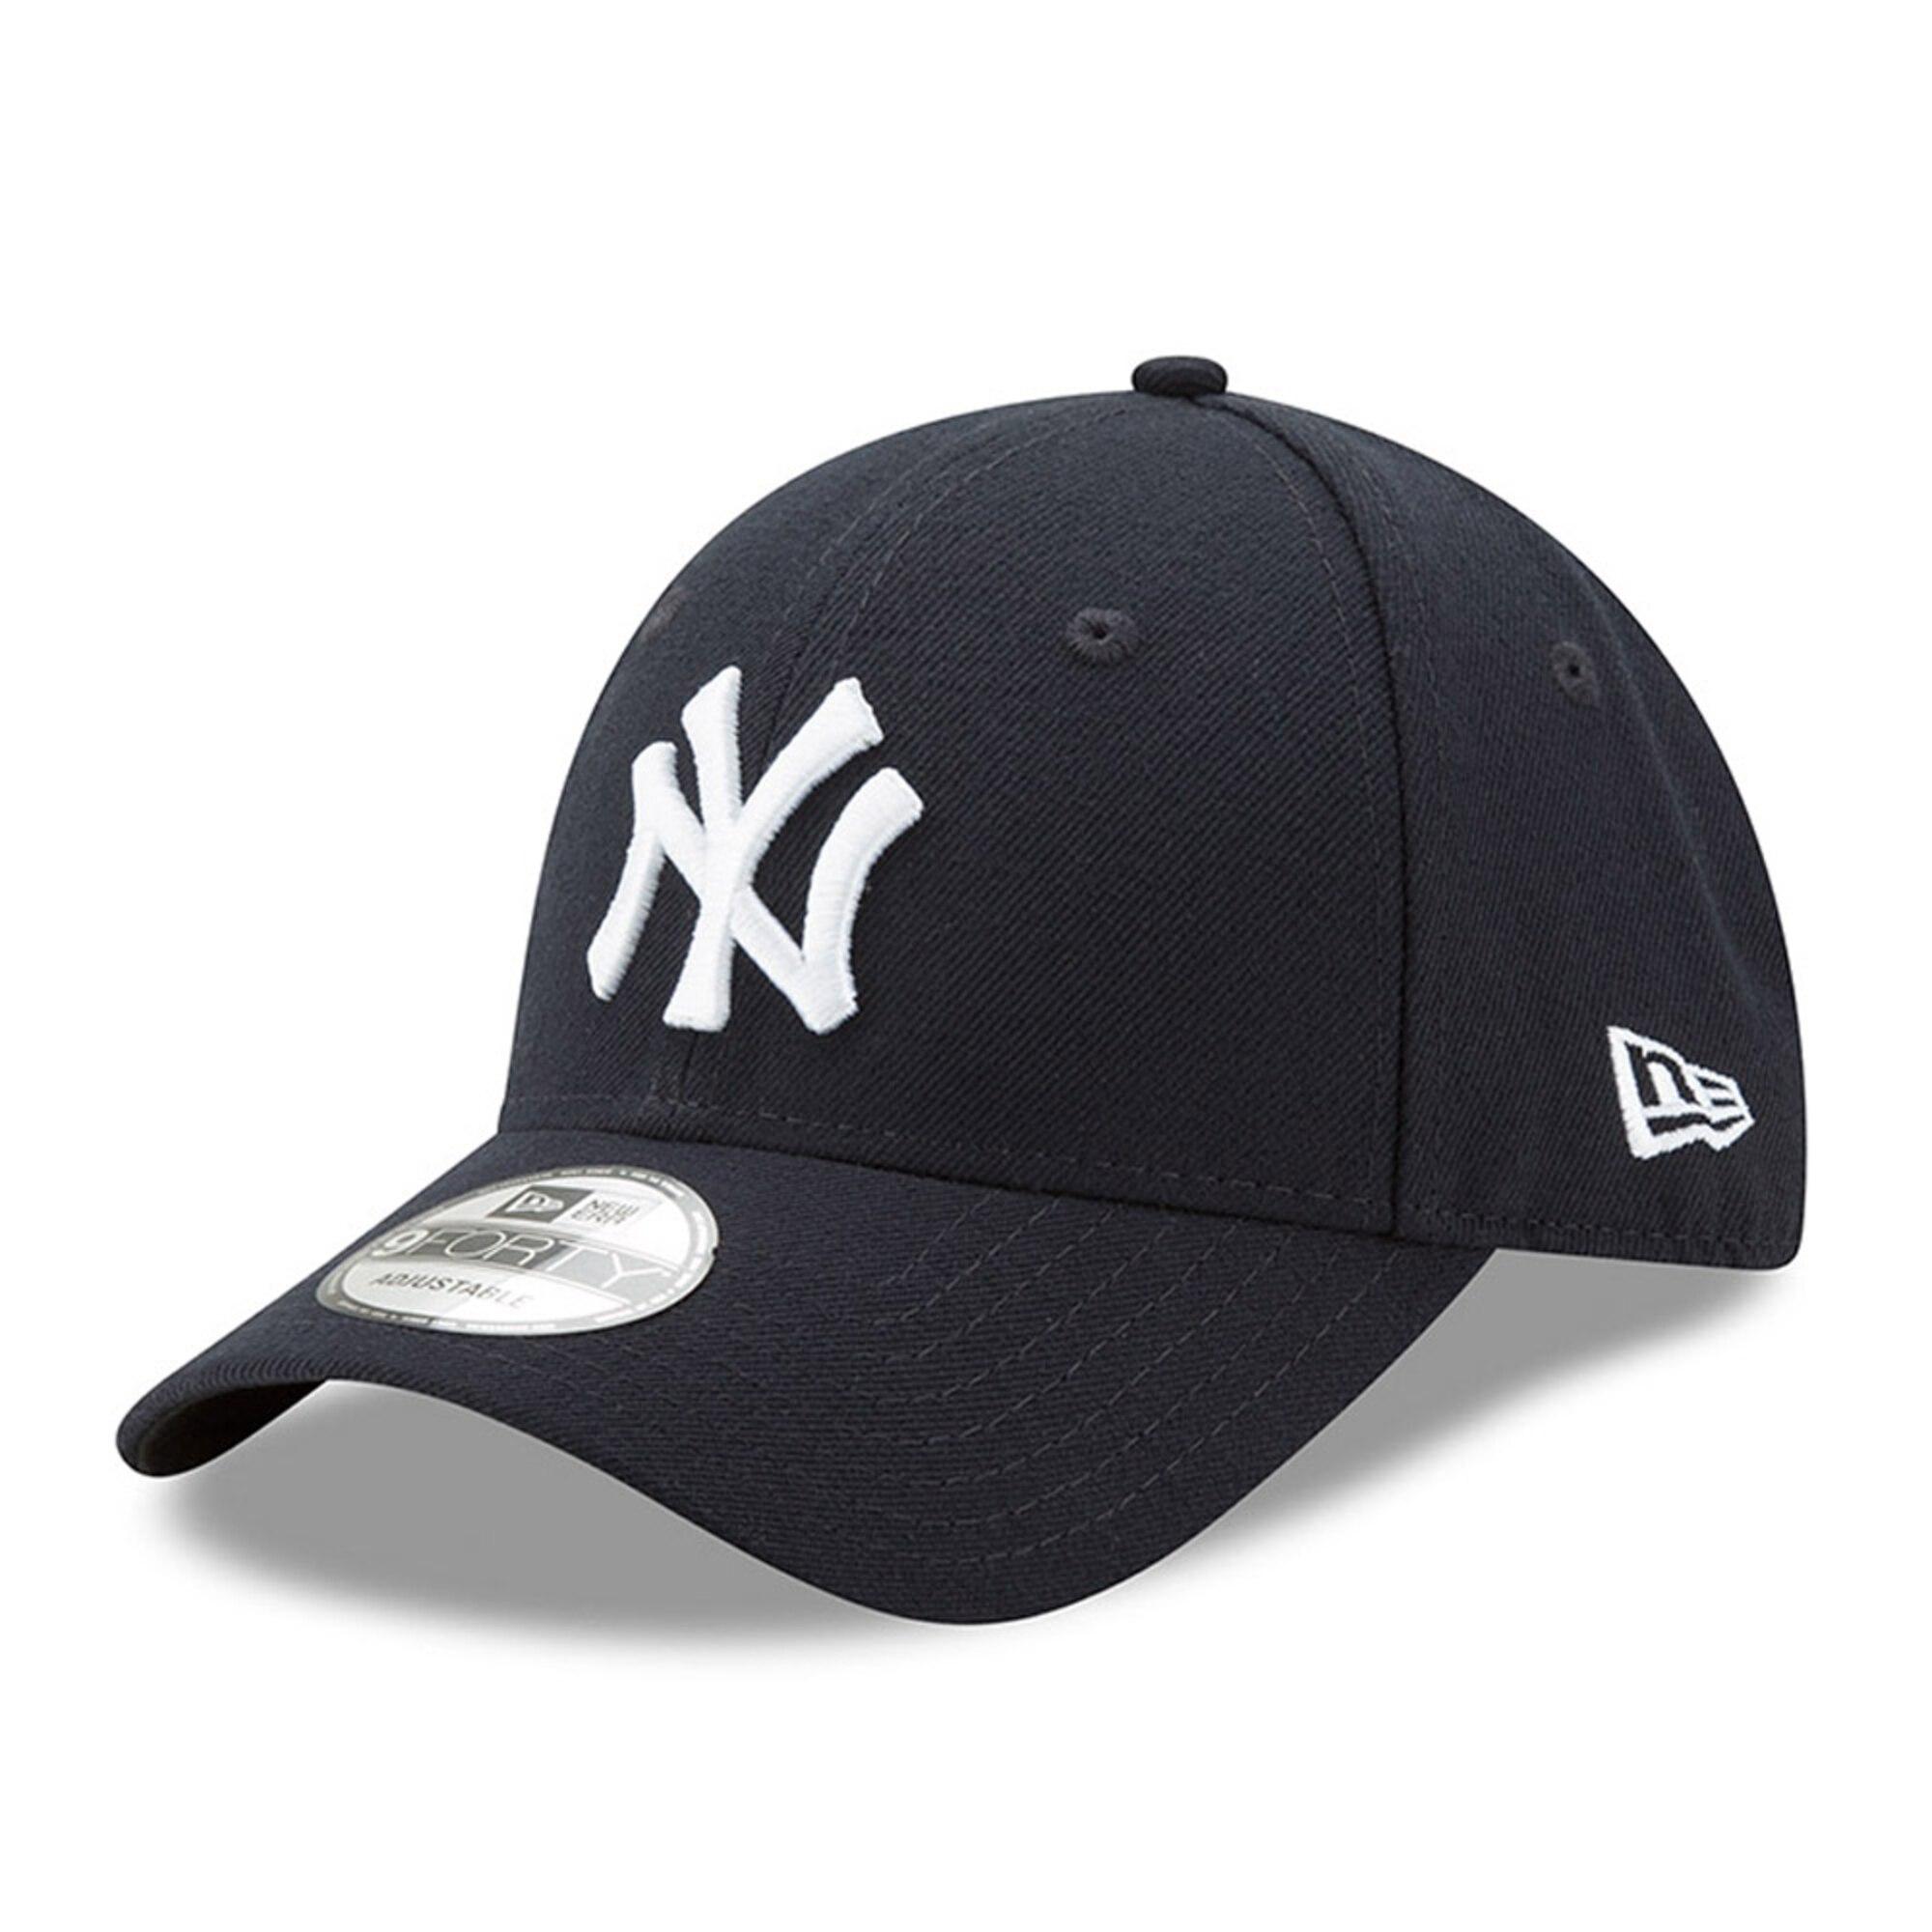 MLB NY Small Logo Adjustable Cap New York Yankees Hat White